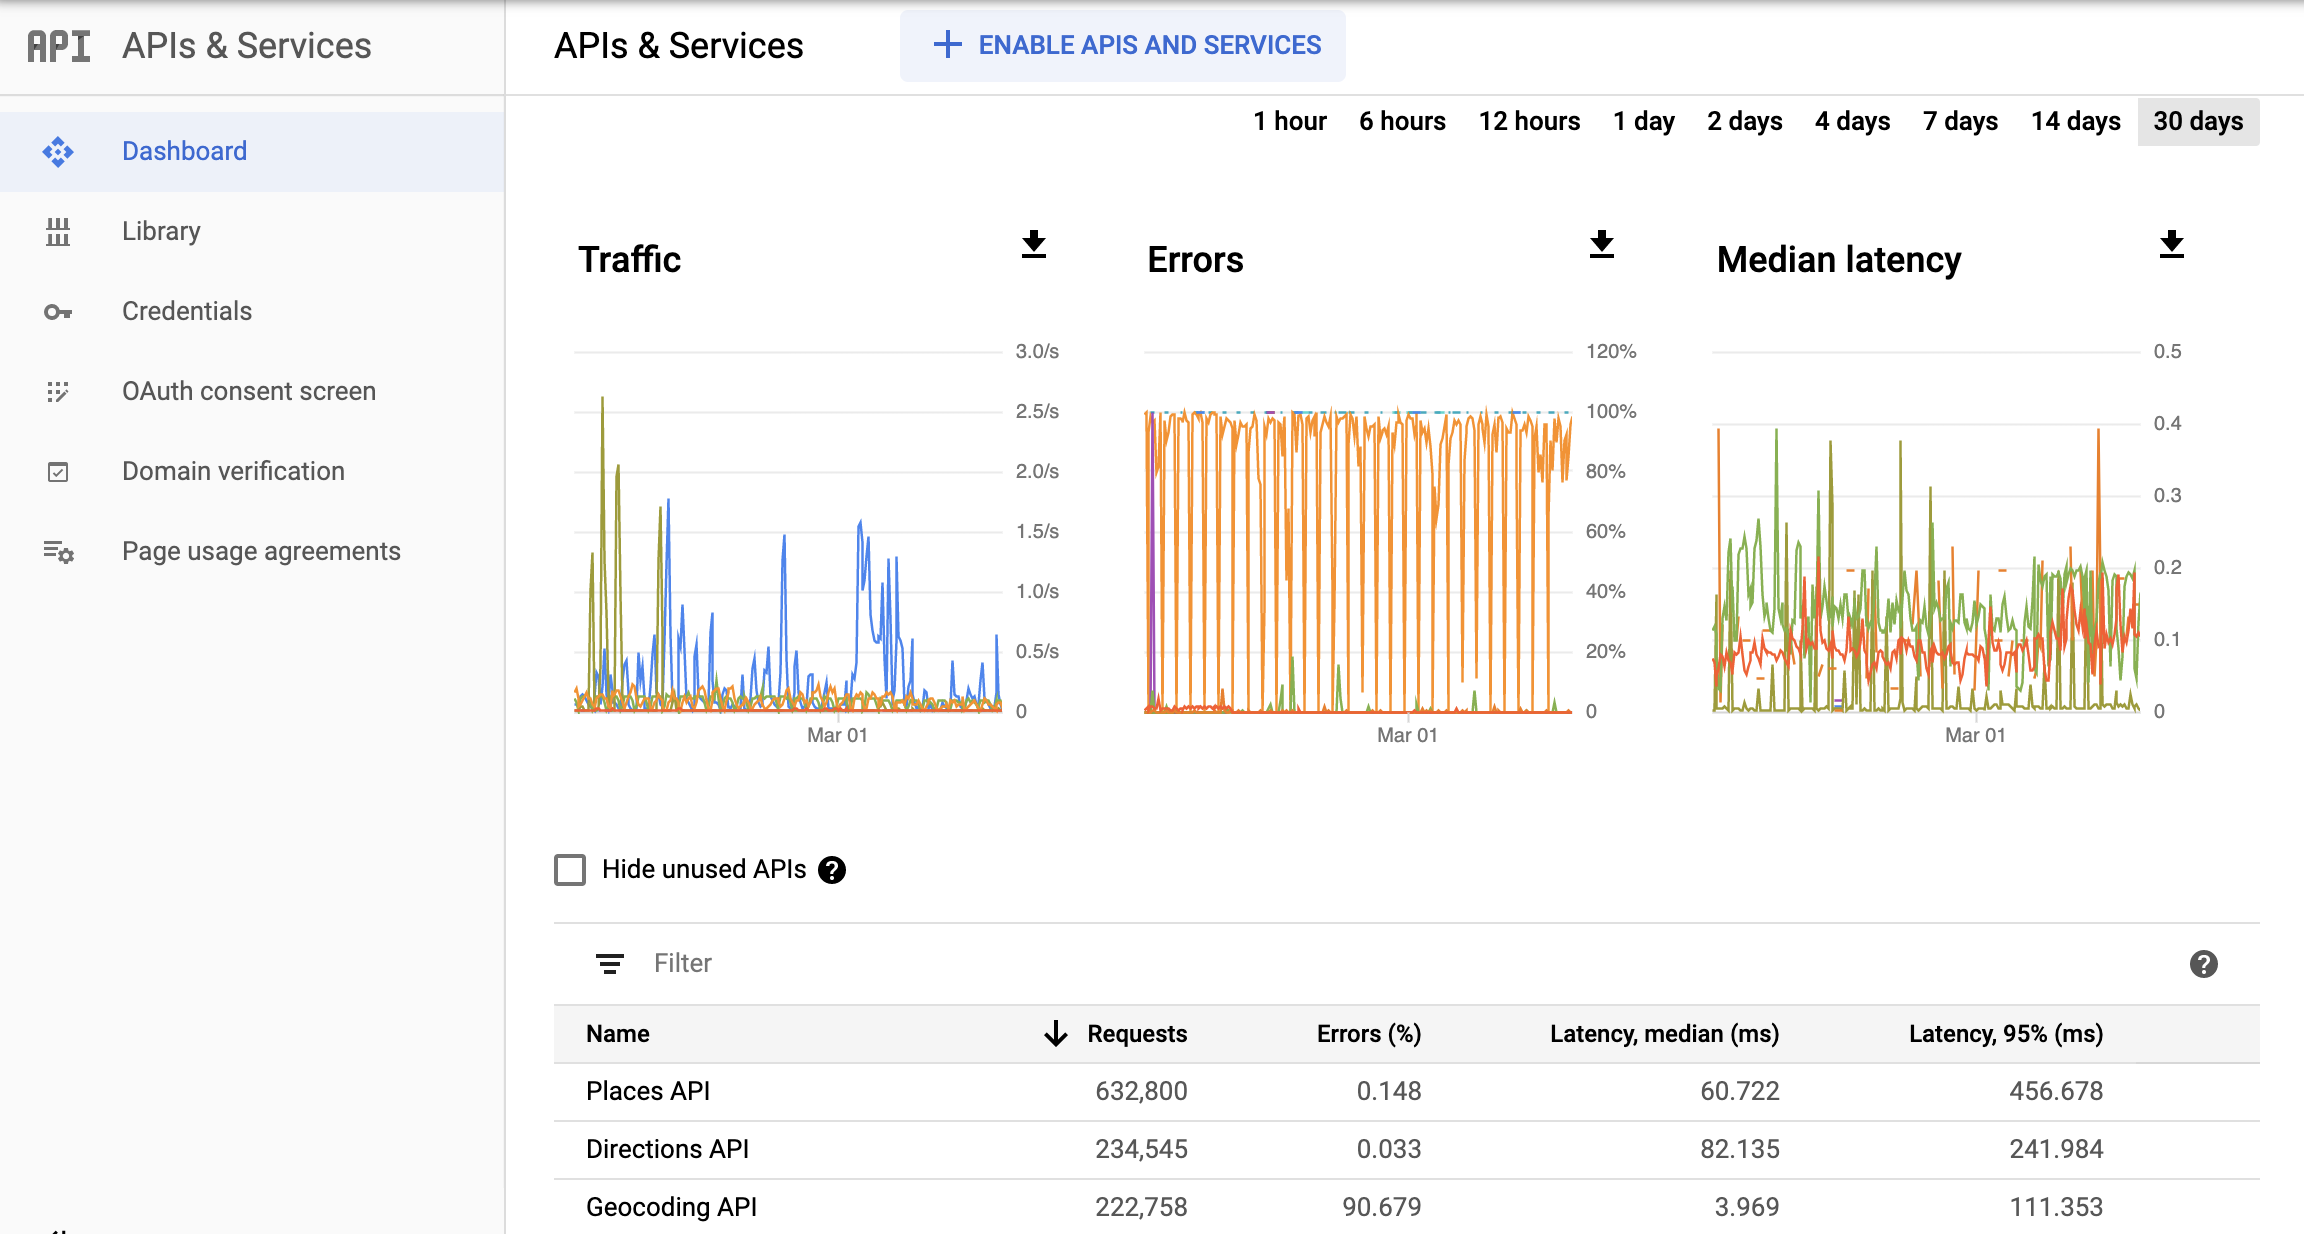 Google Cloud Console 中 Monitoring API 頁面的螢幕截圖，顯示「API 和服務」報表資訊主頁，以及「流量」、「錯誤」和「延遲時間中位數」各自的圖表。這些圖表可顯示 1 小時至 30 天的資料。